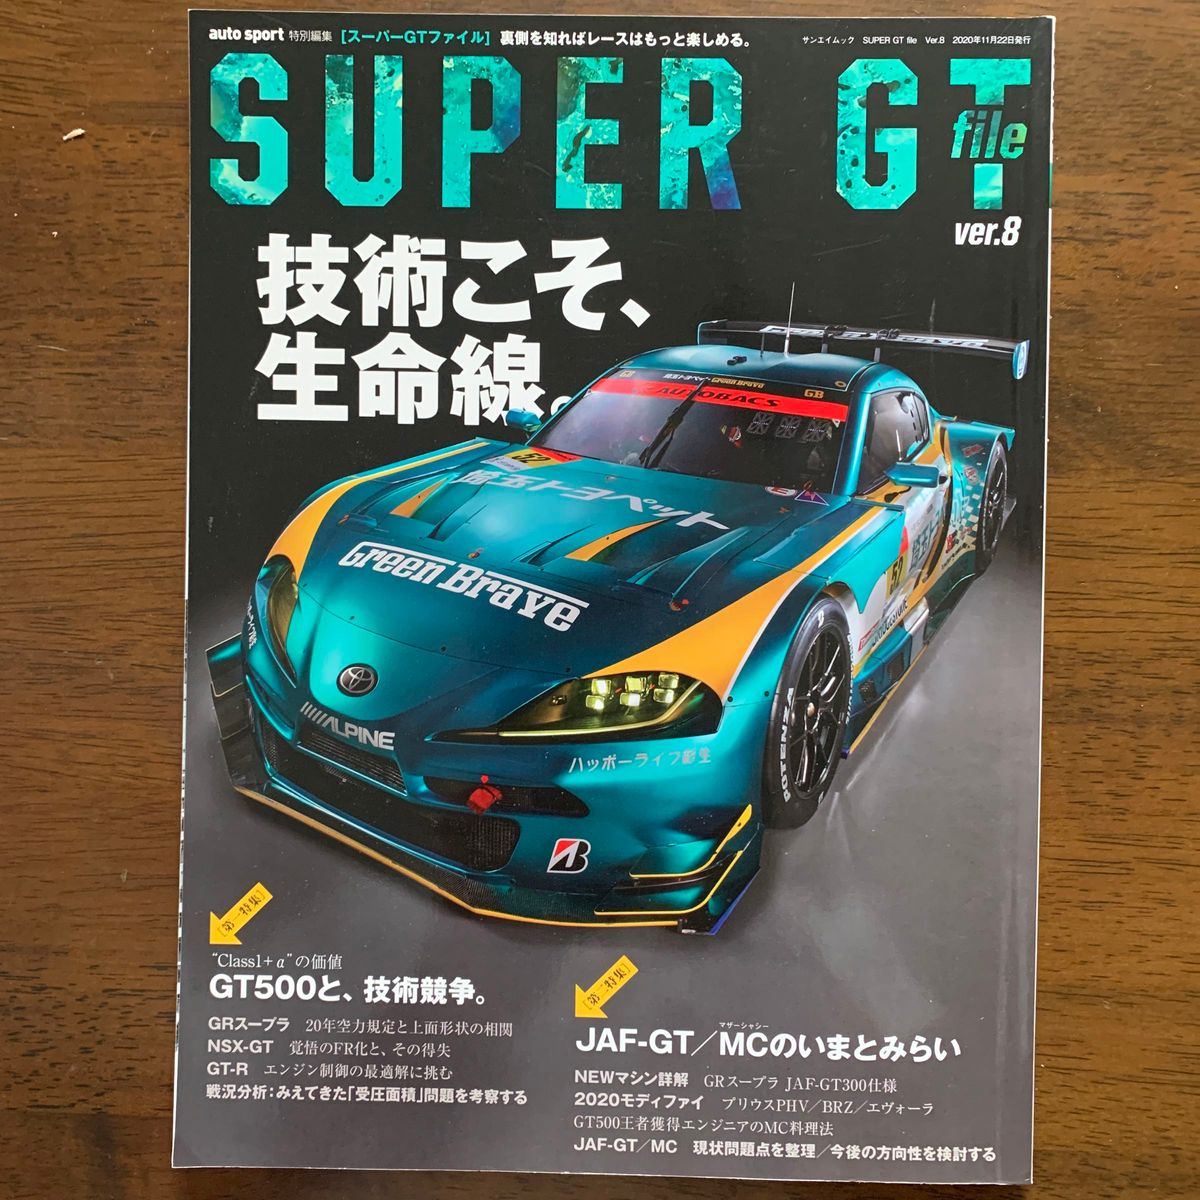 SUPER GT file ver.8 